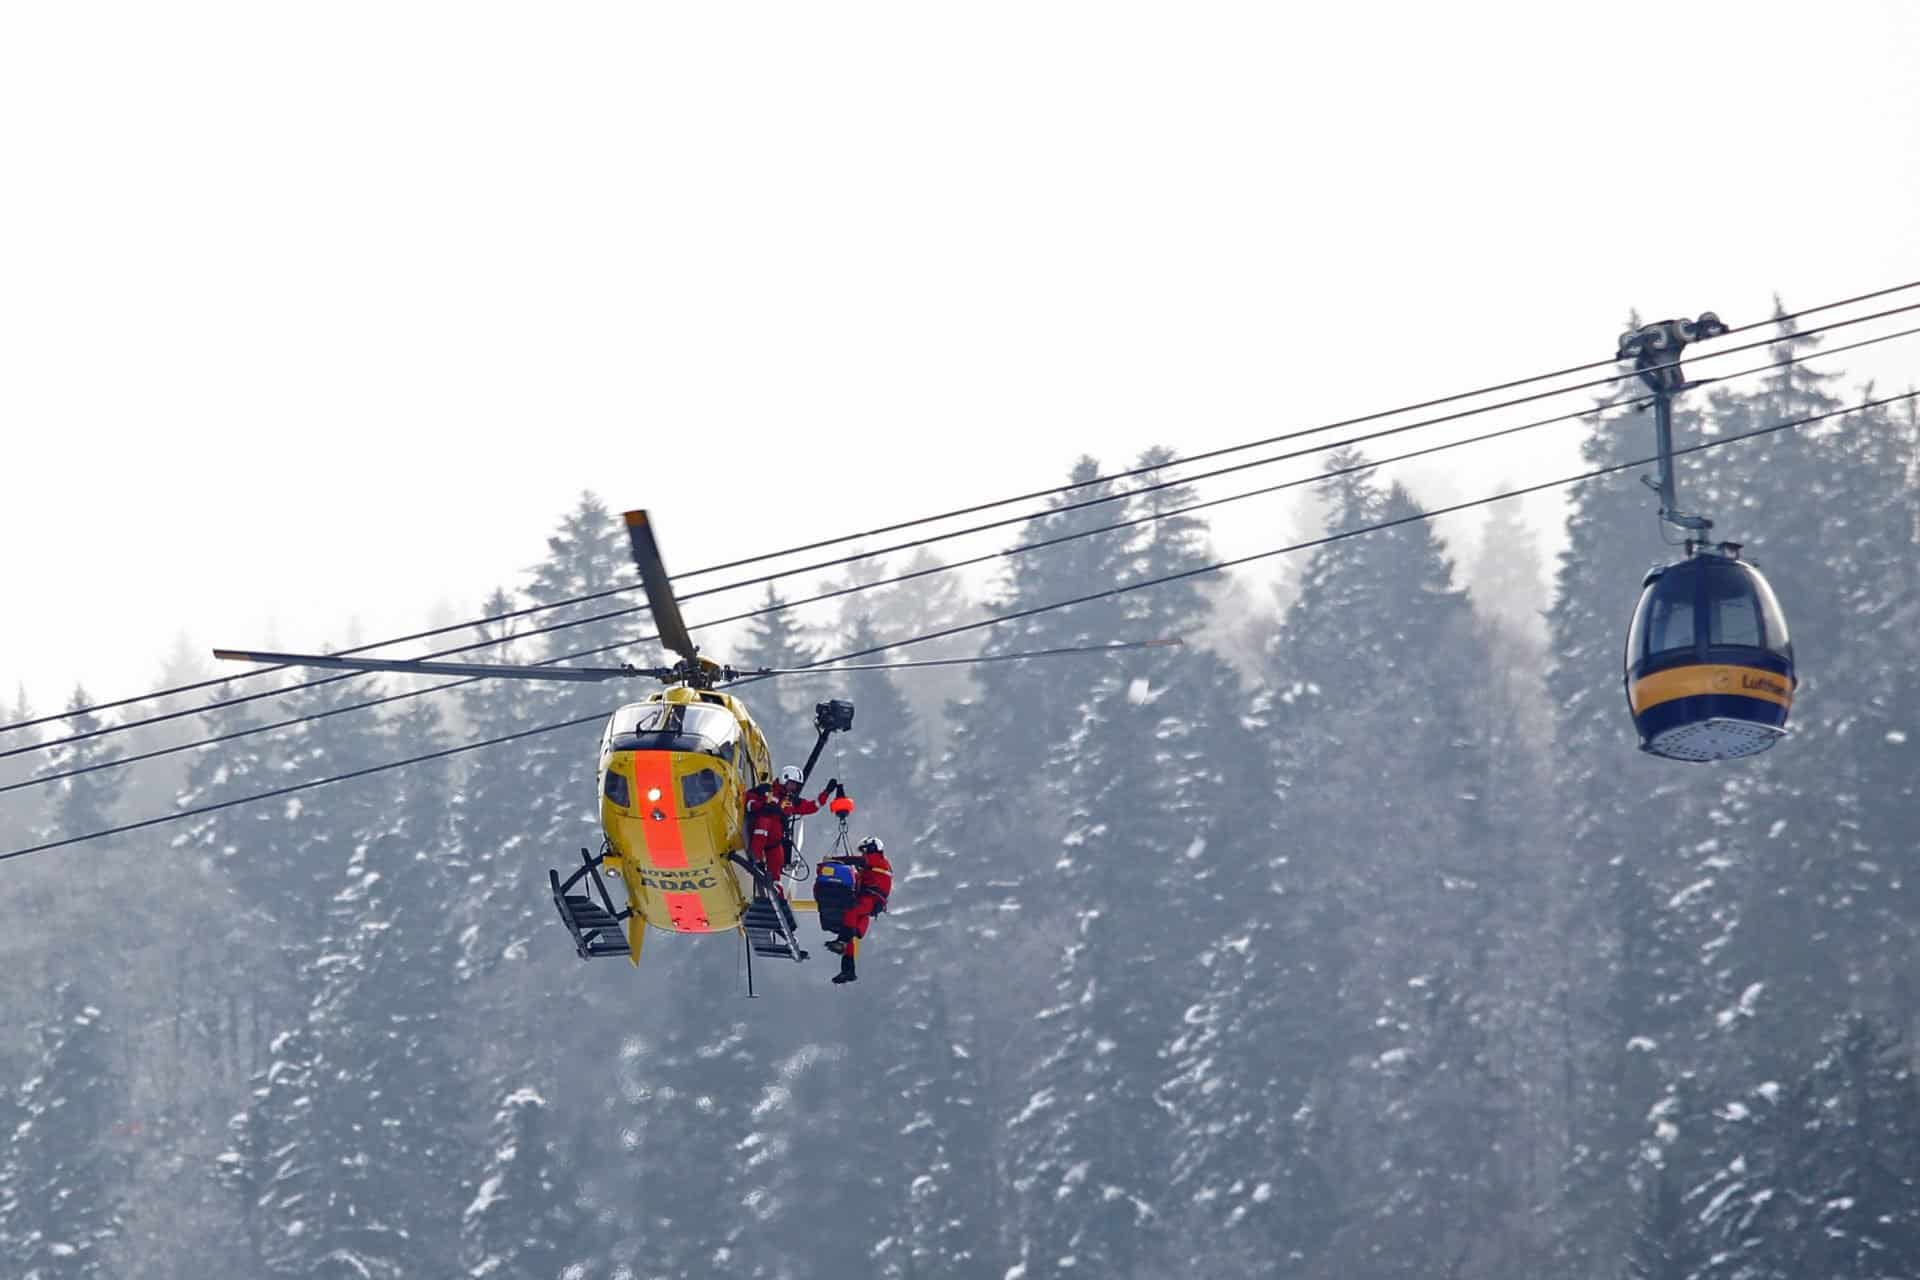 El fatal accidente de esquí de Ben Bennett lleva a reunir GoFundMe y homenajes 1